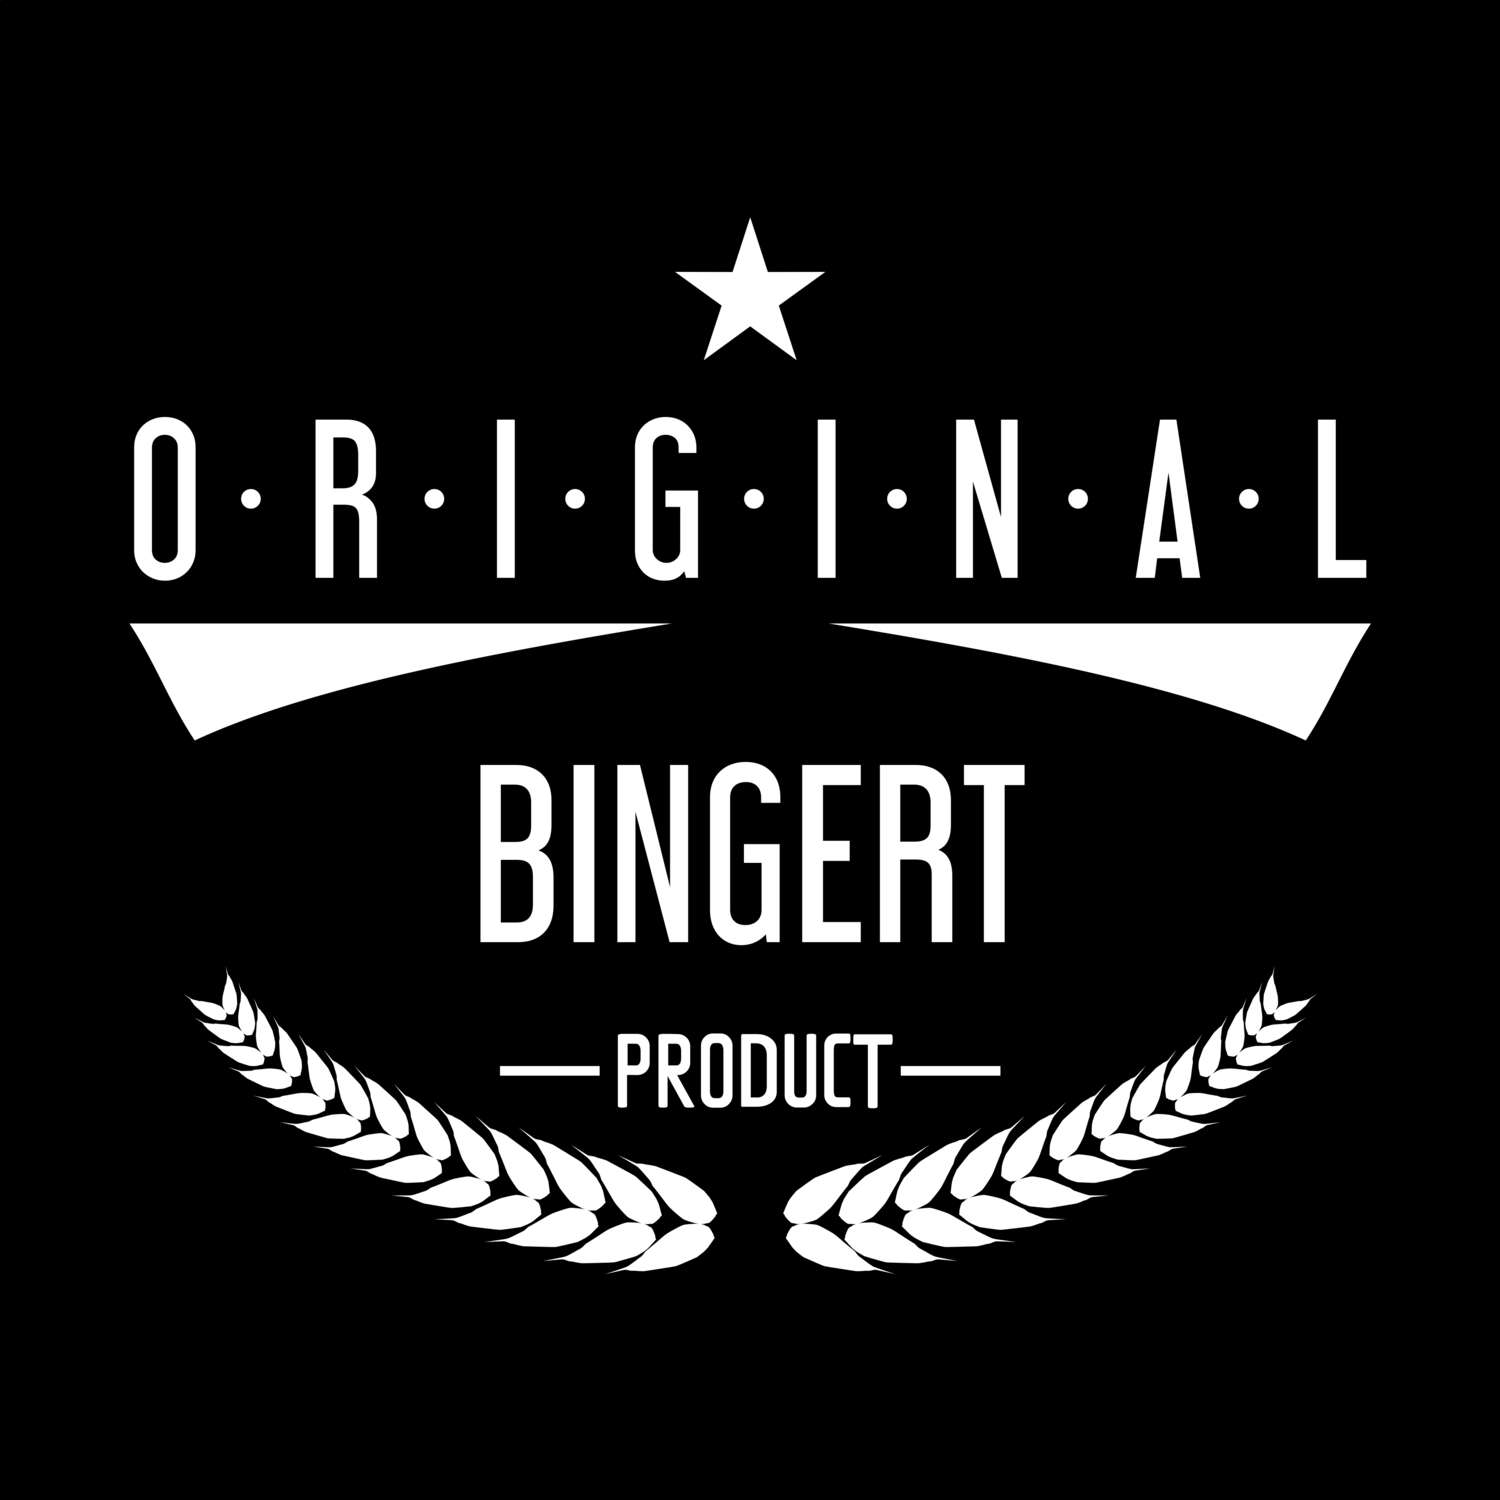 Bingert T-Shirt »Original Product«